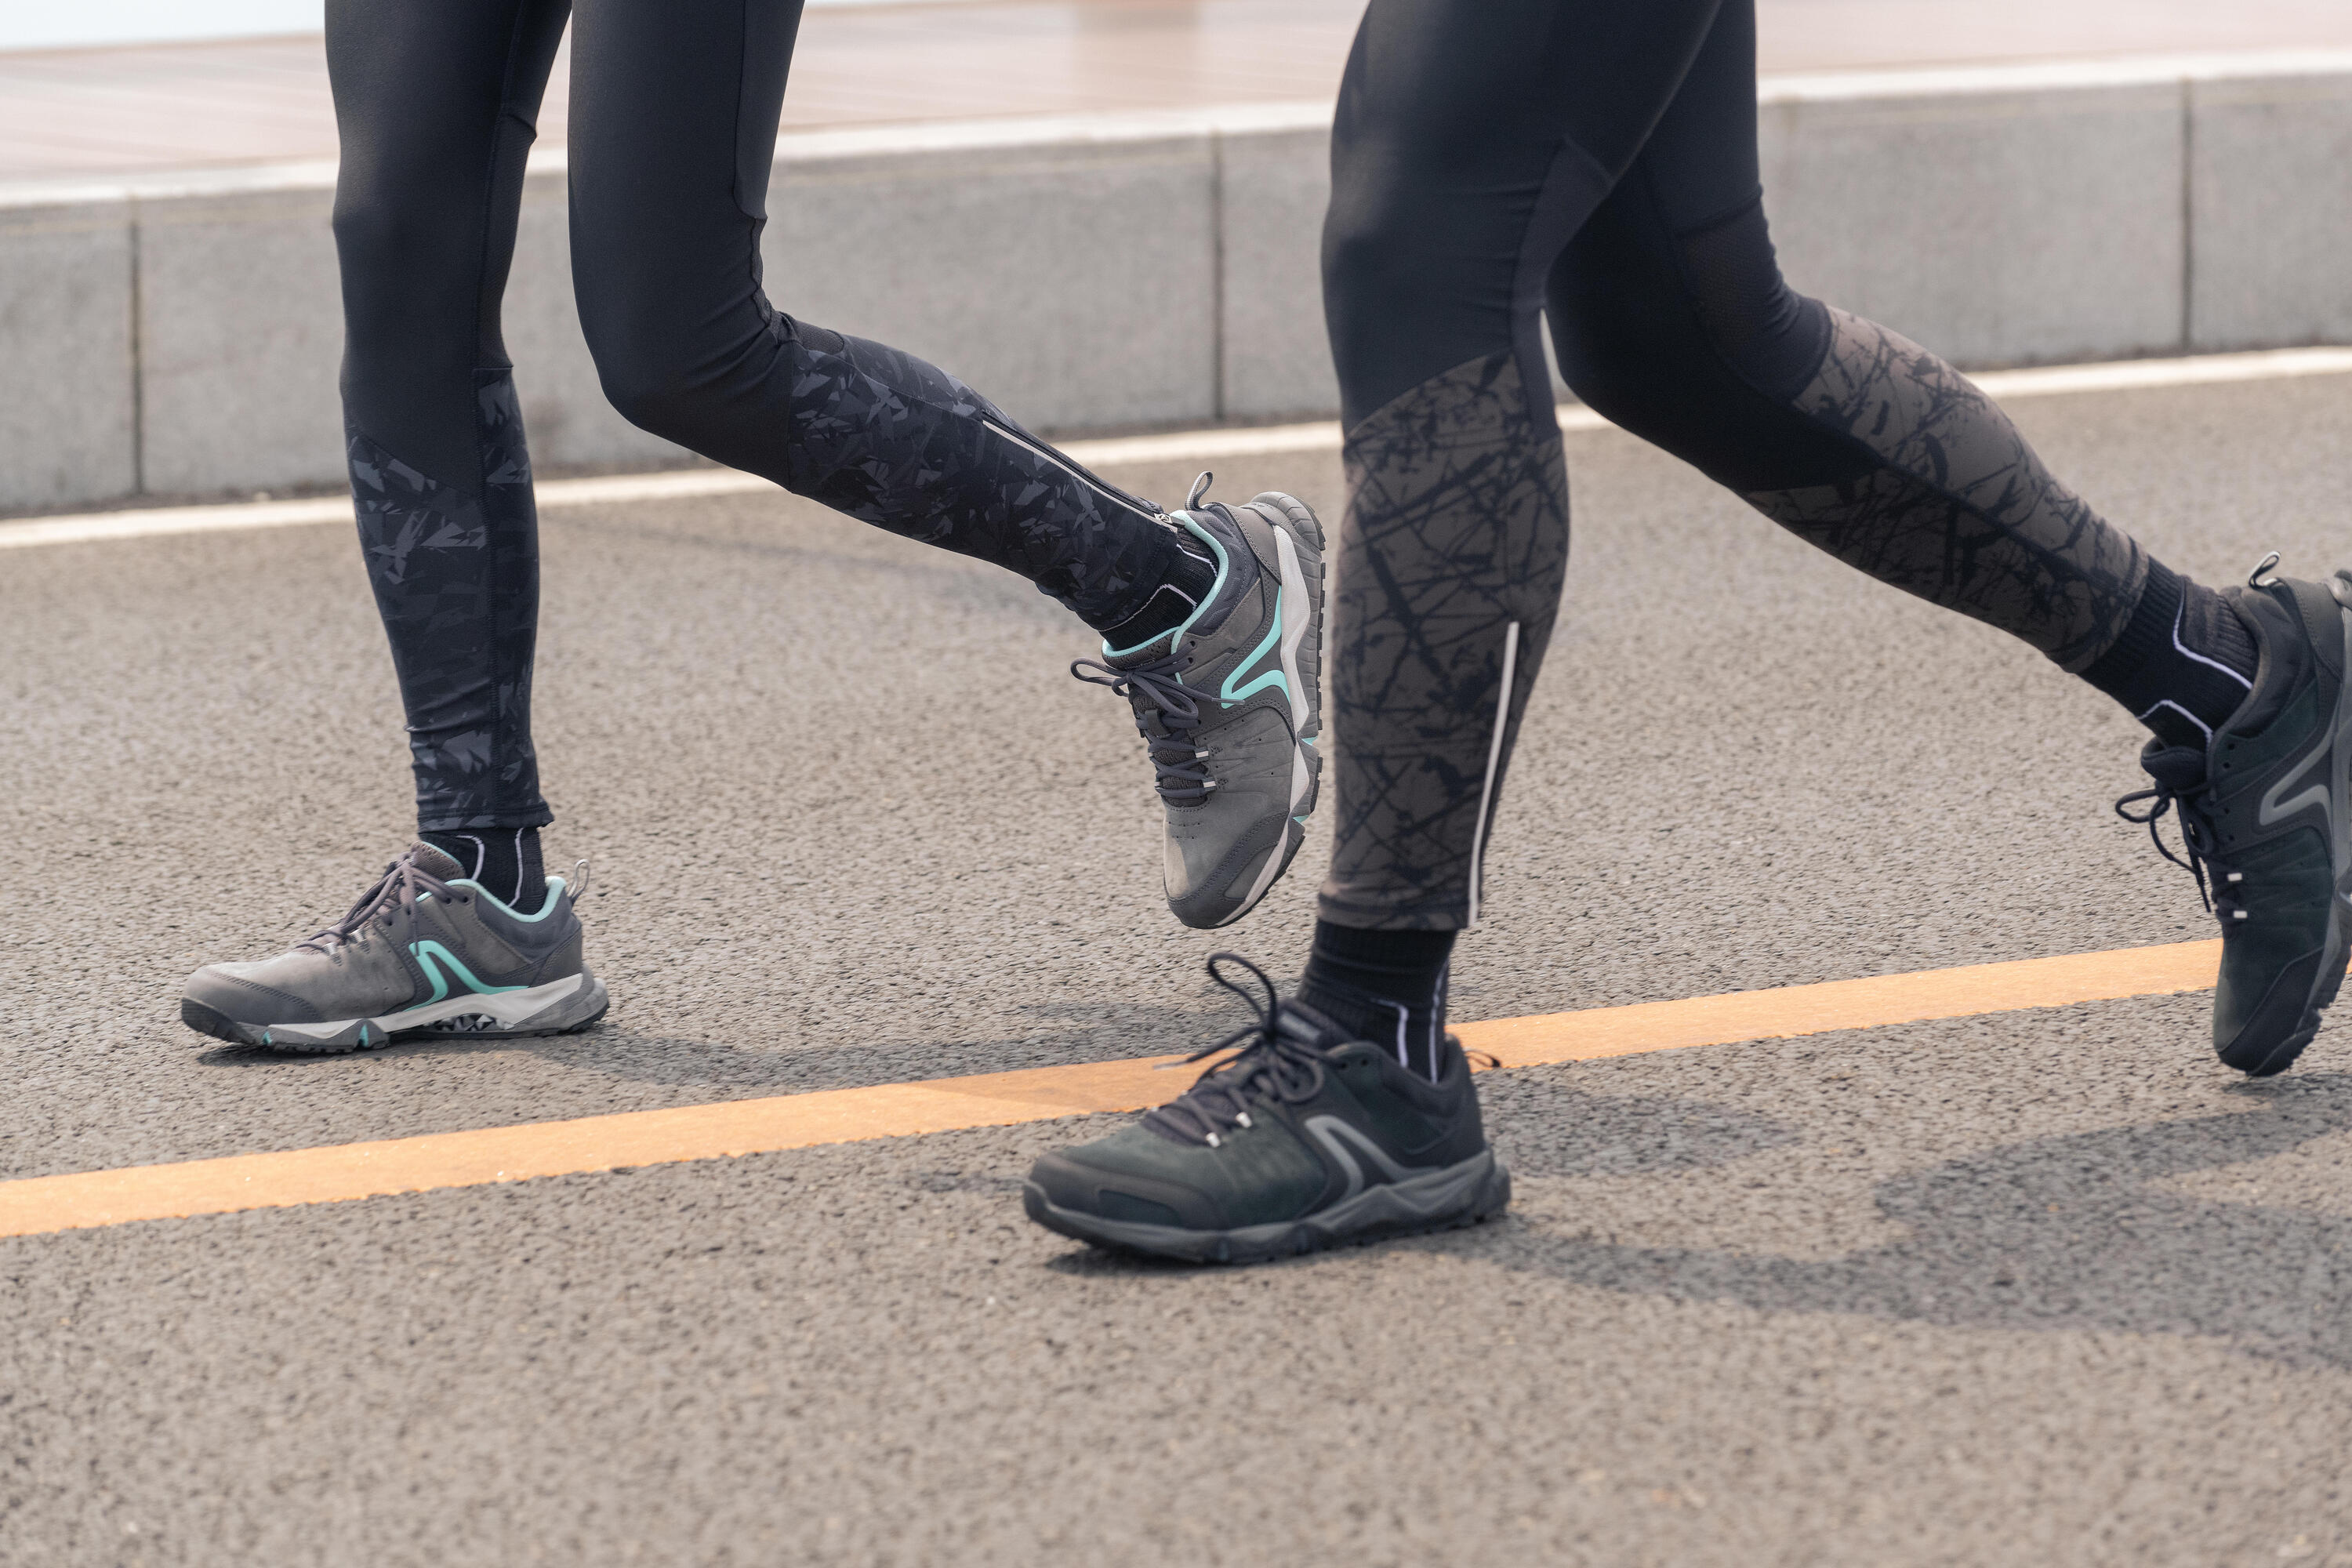 PW 940 Propulse Motion Women's Fitness Walking Shoes leather grey/blue 3/10